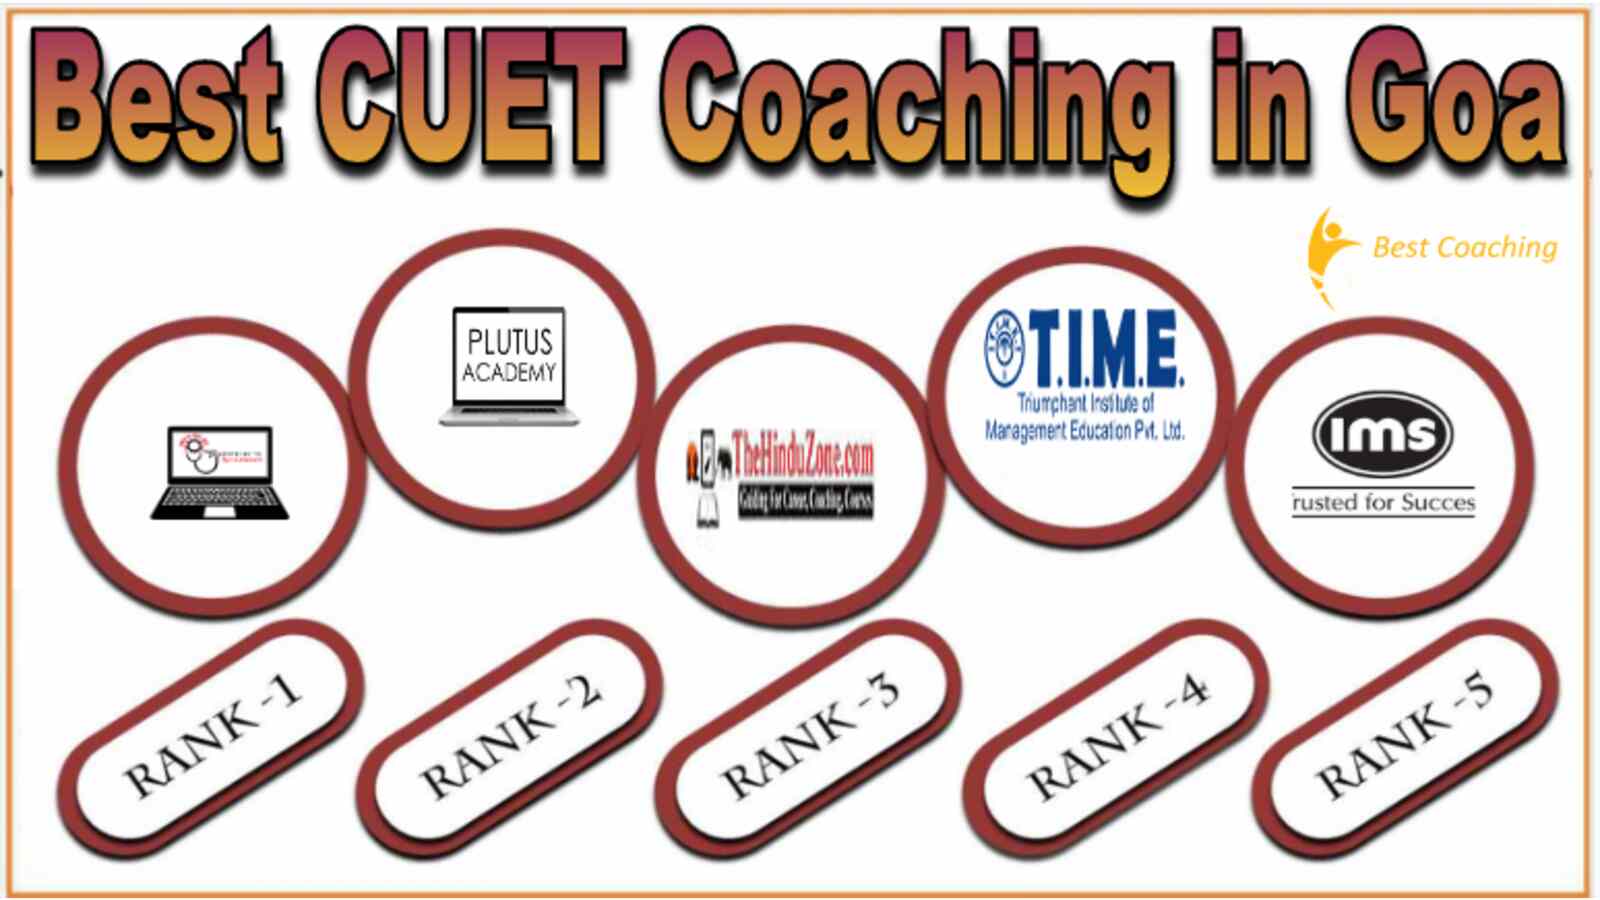 Best CUET Coaching in Goa